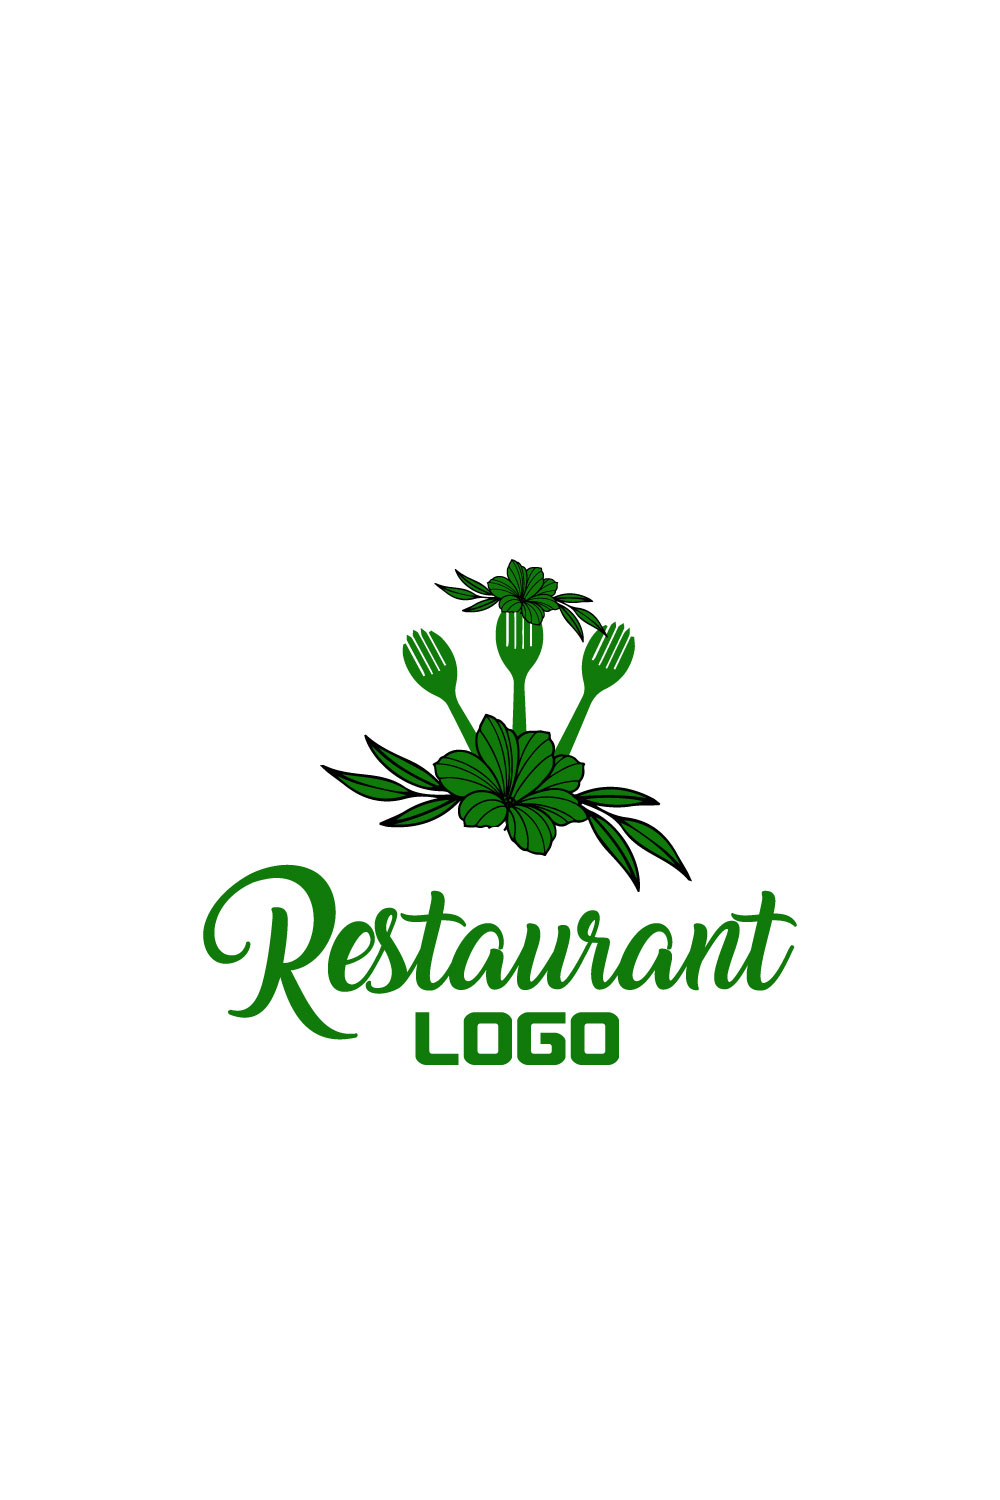 Free Floral Restaurant Logo pinterest preview image.